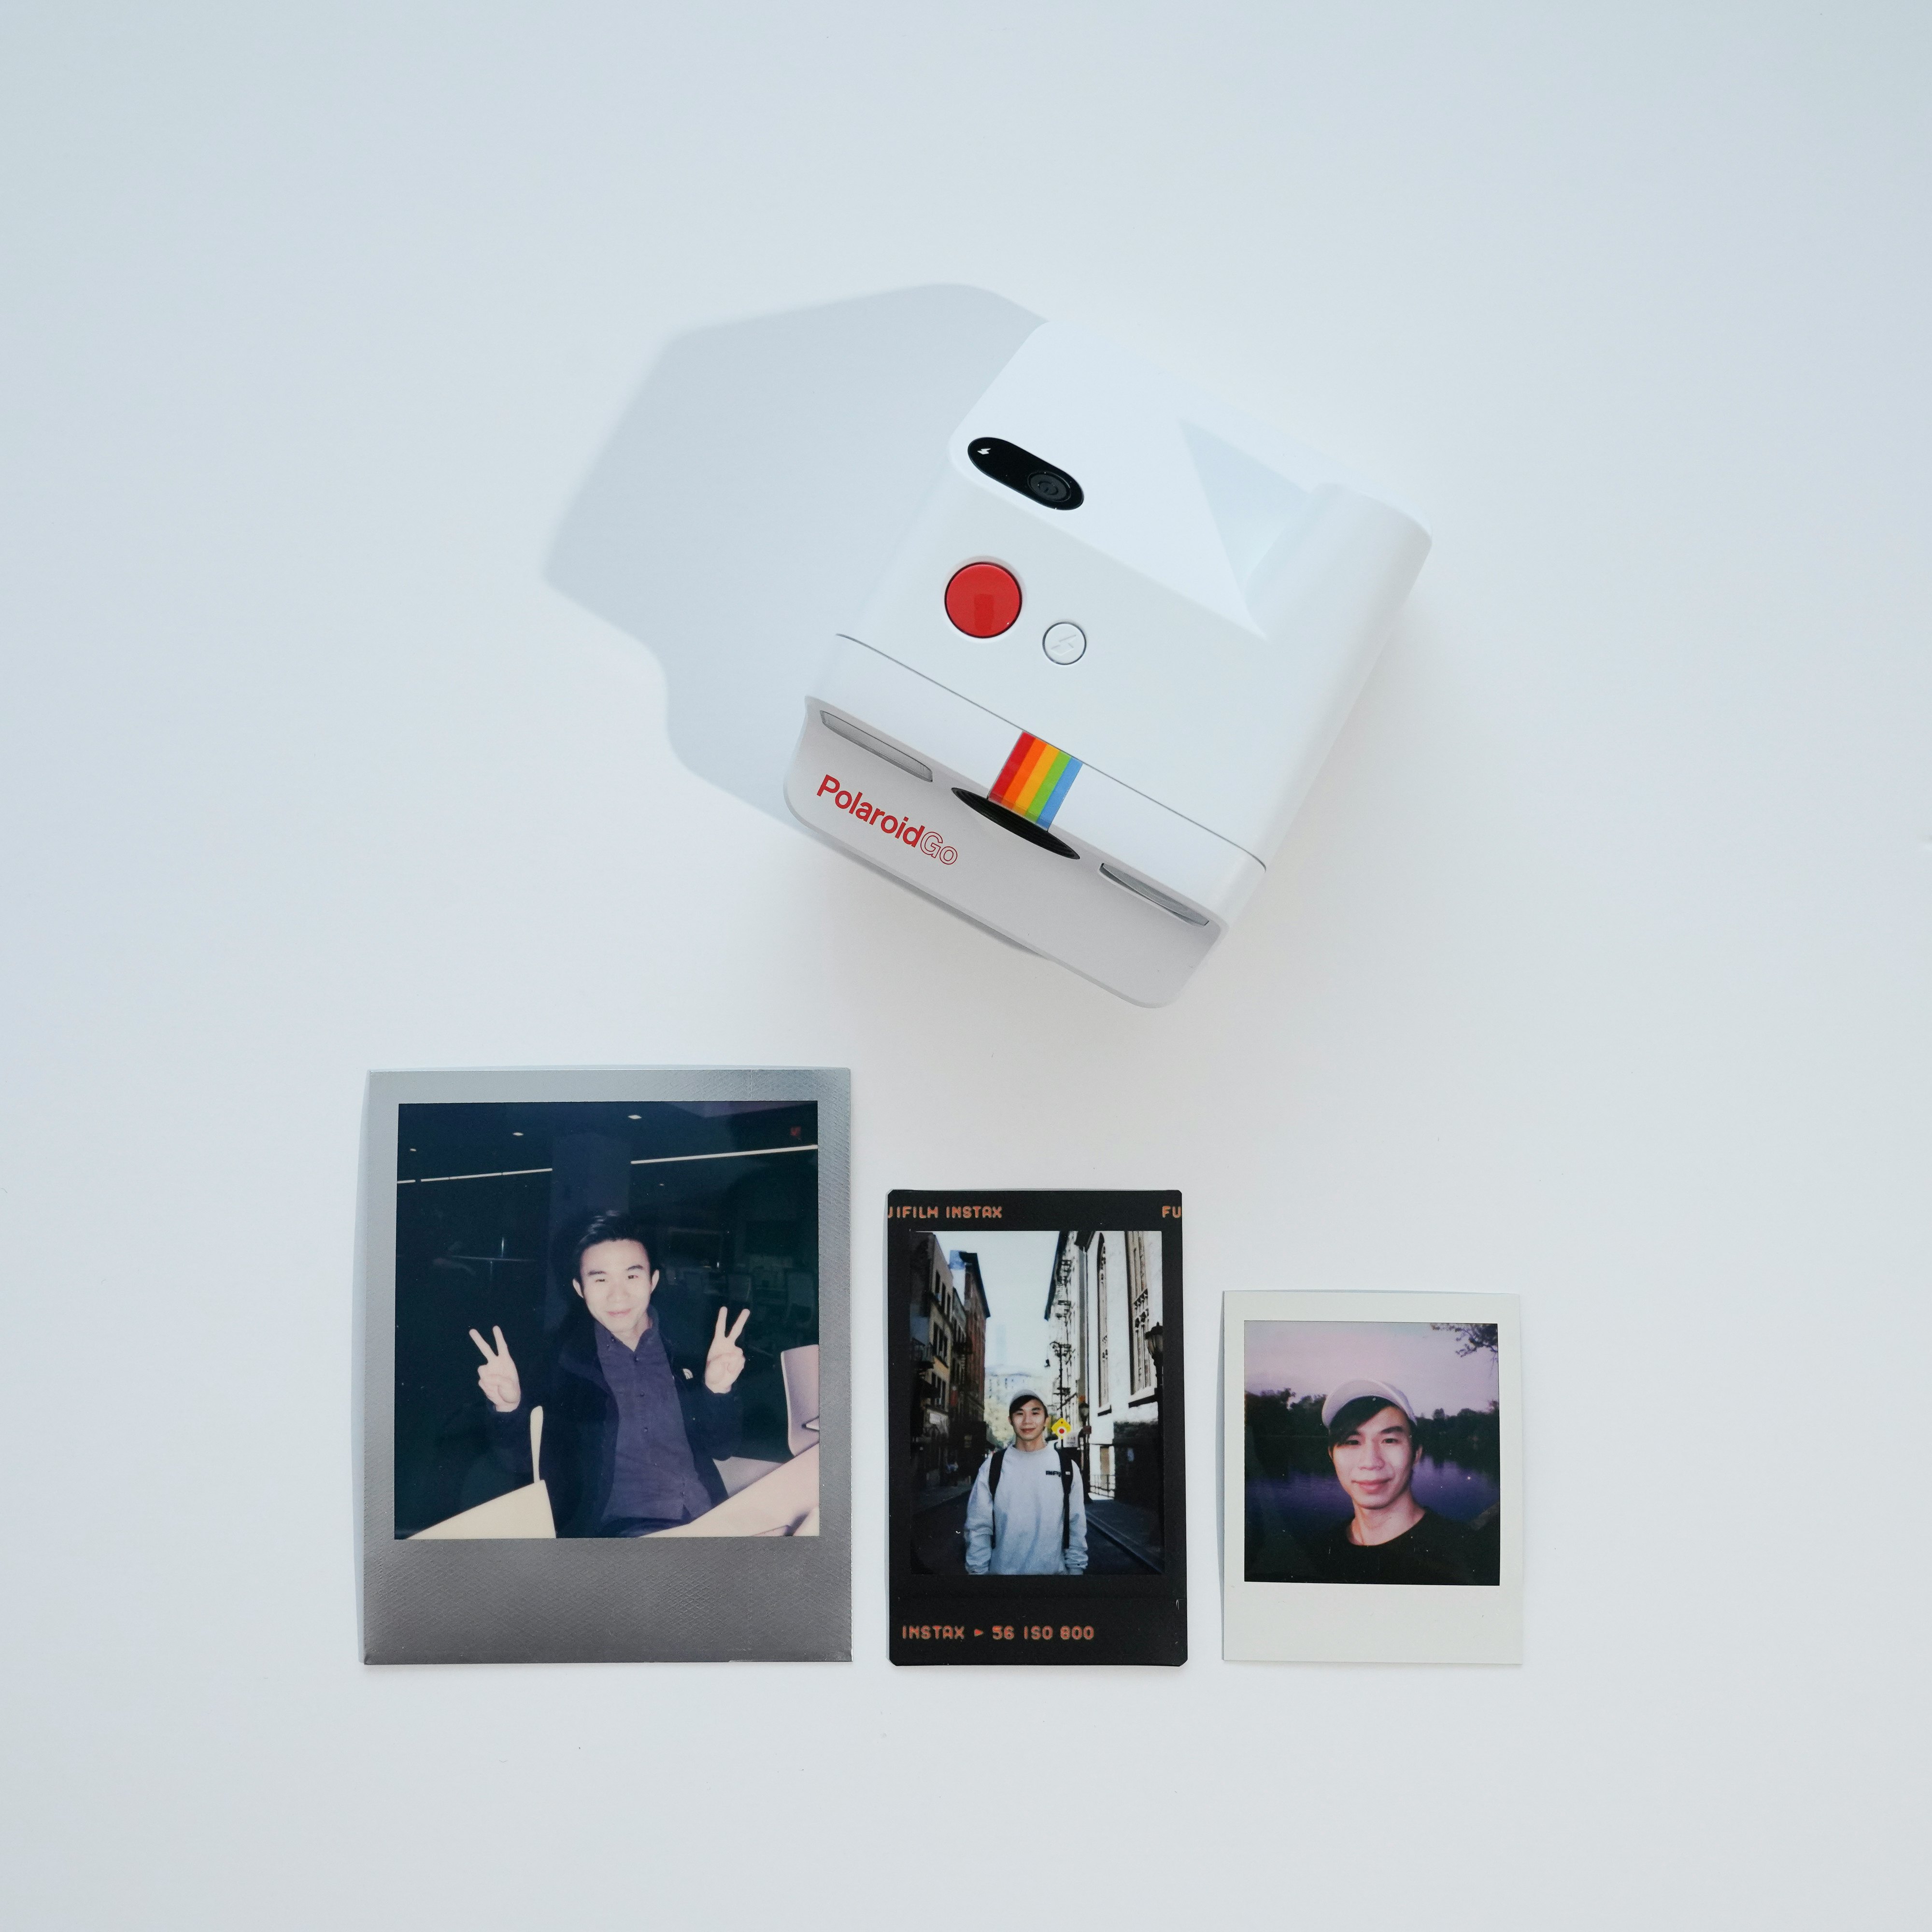 Polaroid Go Review: A Mini Instant Film Camera from Polaroid